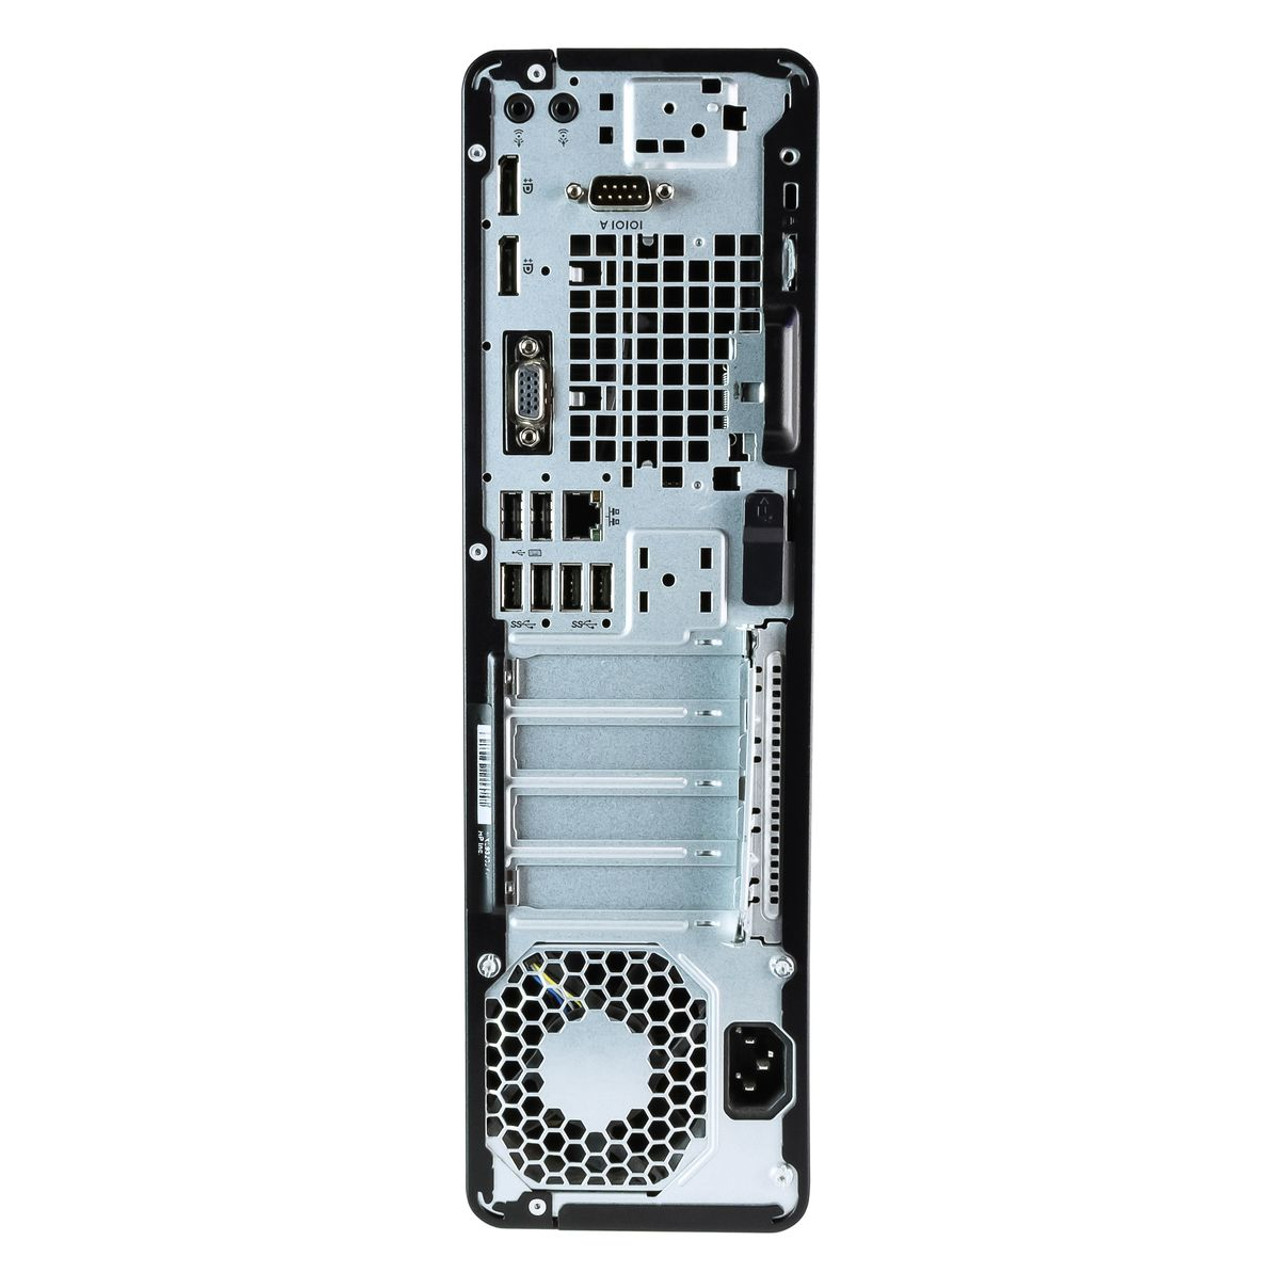 HP® EliteDesk 800 G4 Intel Core i5, 8GB RAM, 500GB SSD Complete Bundle product image